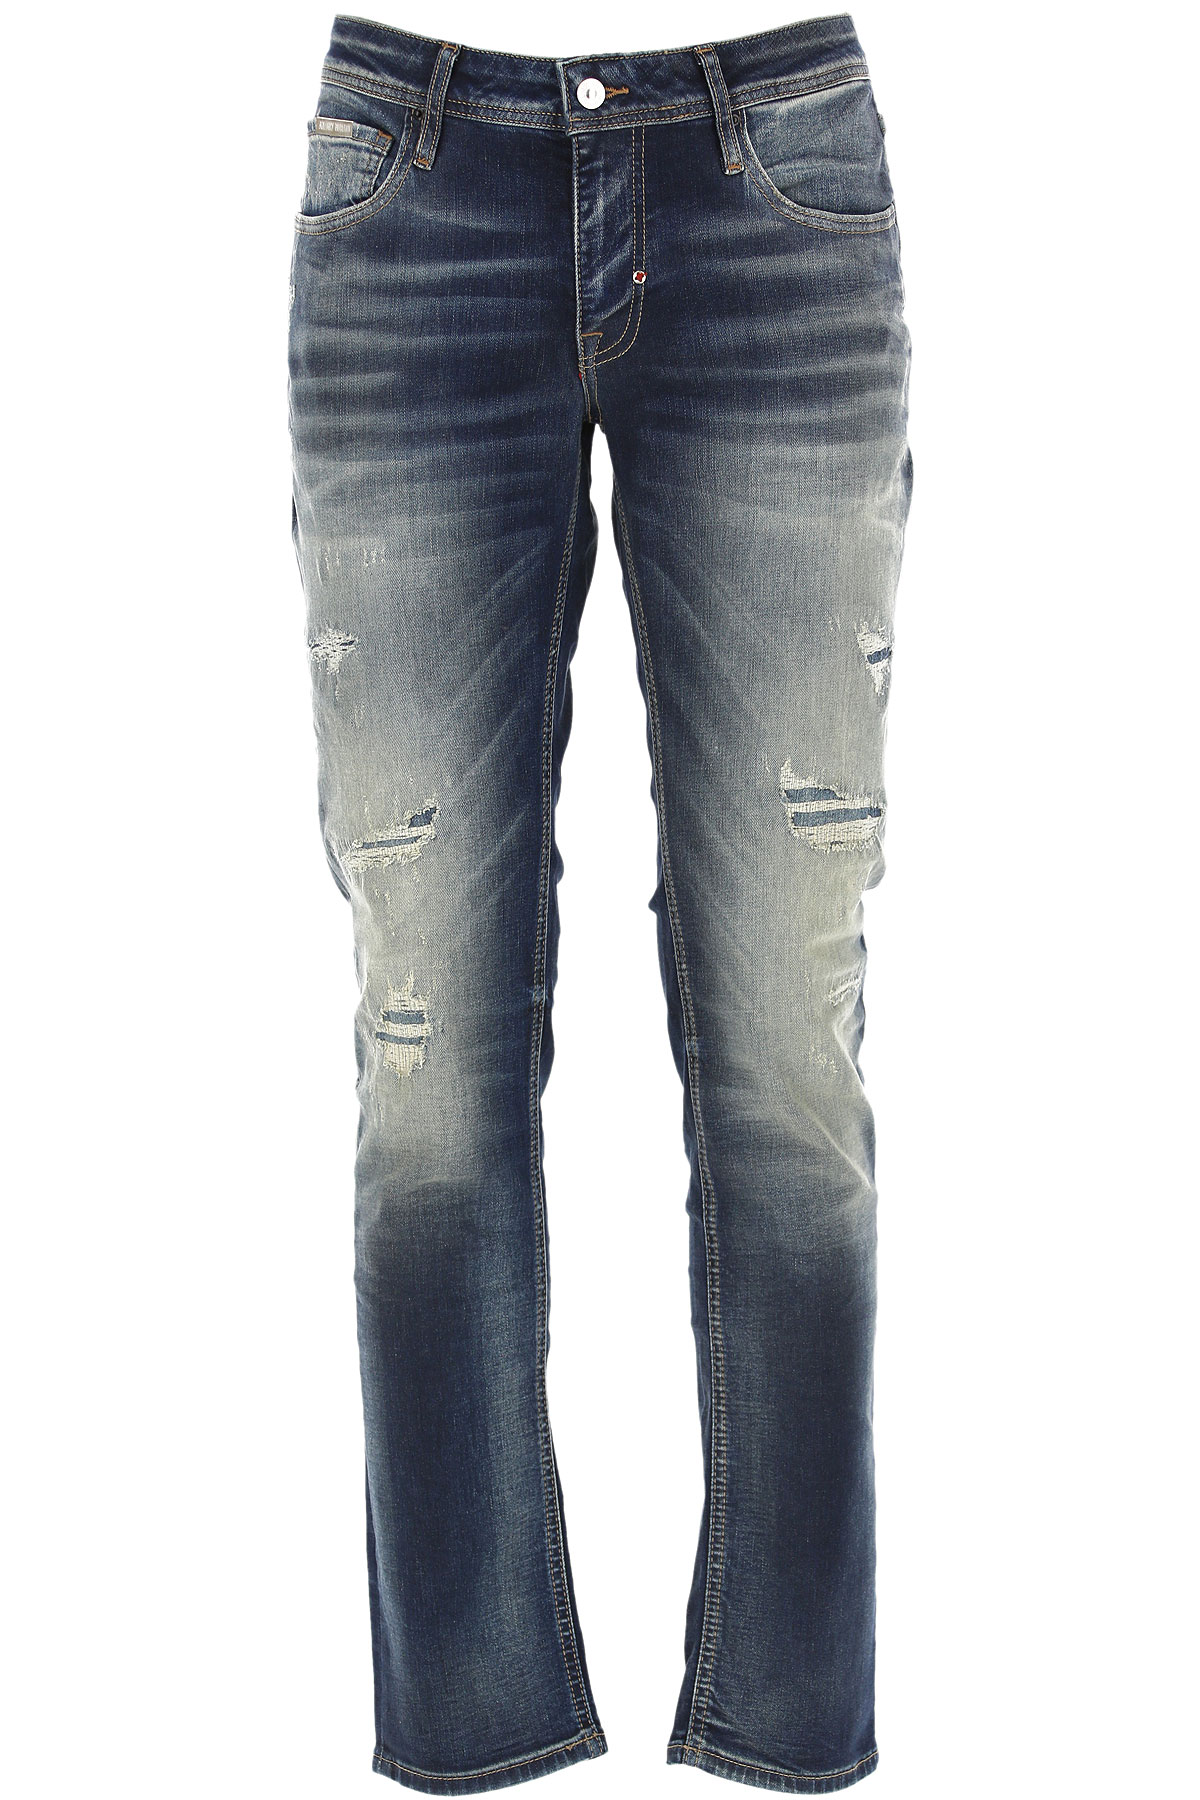 Antony Morato Jeans, Bluejeans, Denim Jeans für Herren Günstig im Sale, Denim- Blau, Baumwolle, 2017, 46 48 50 52 54